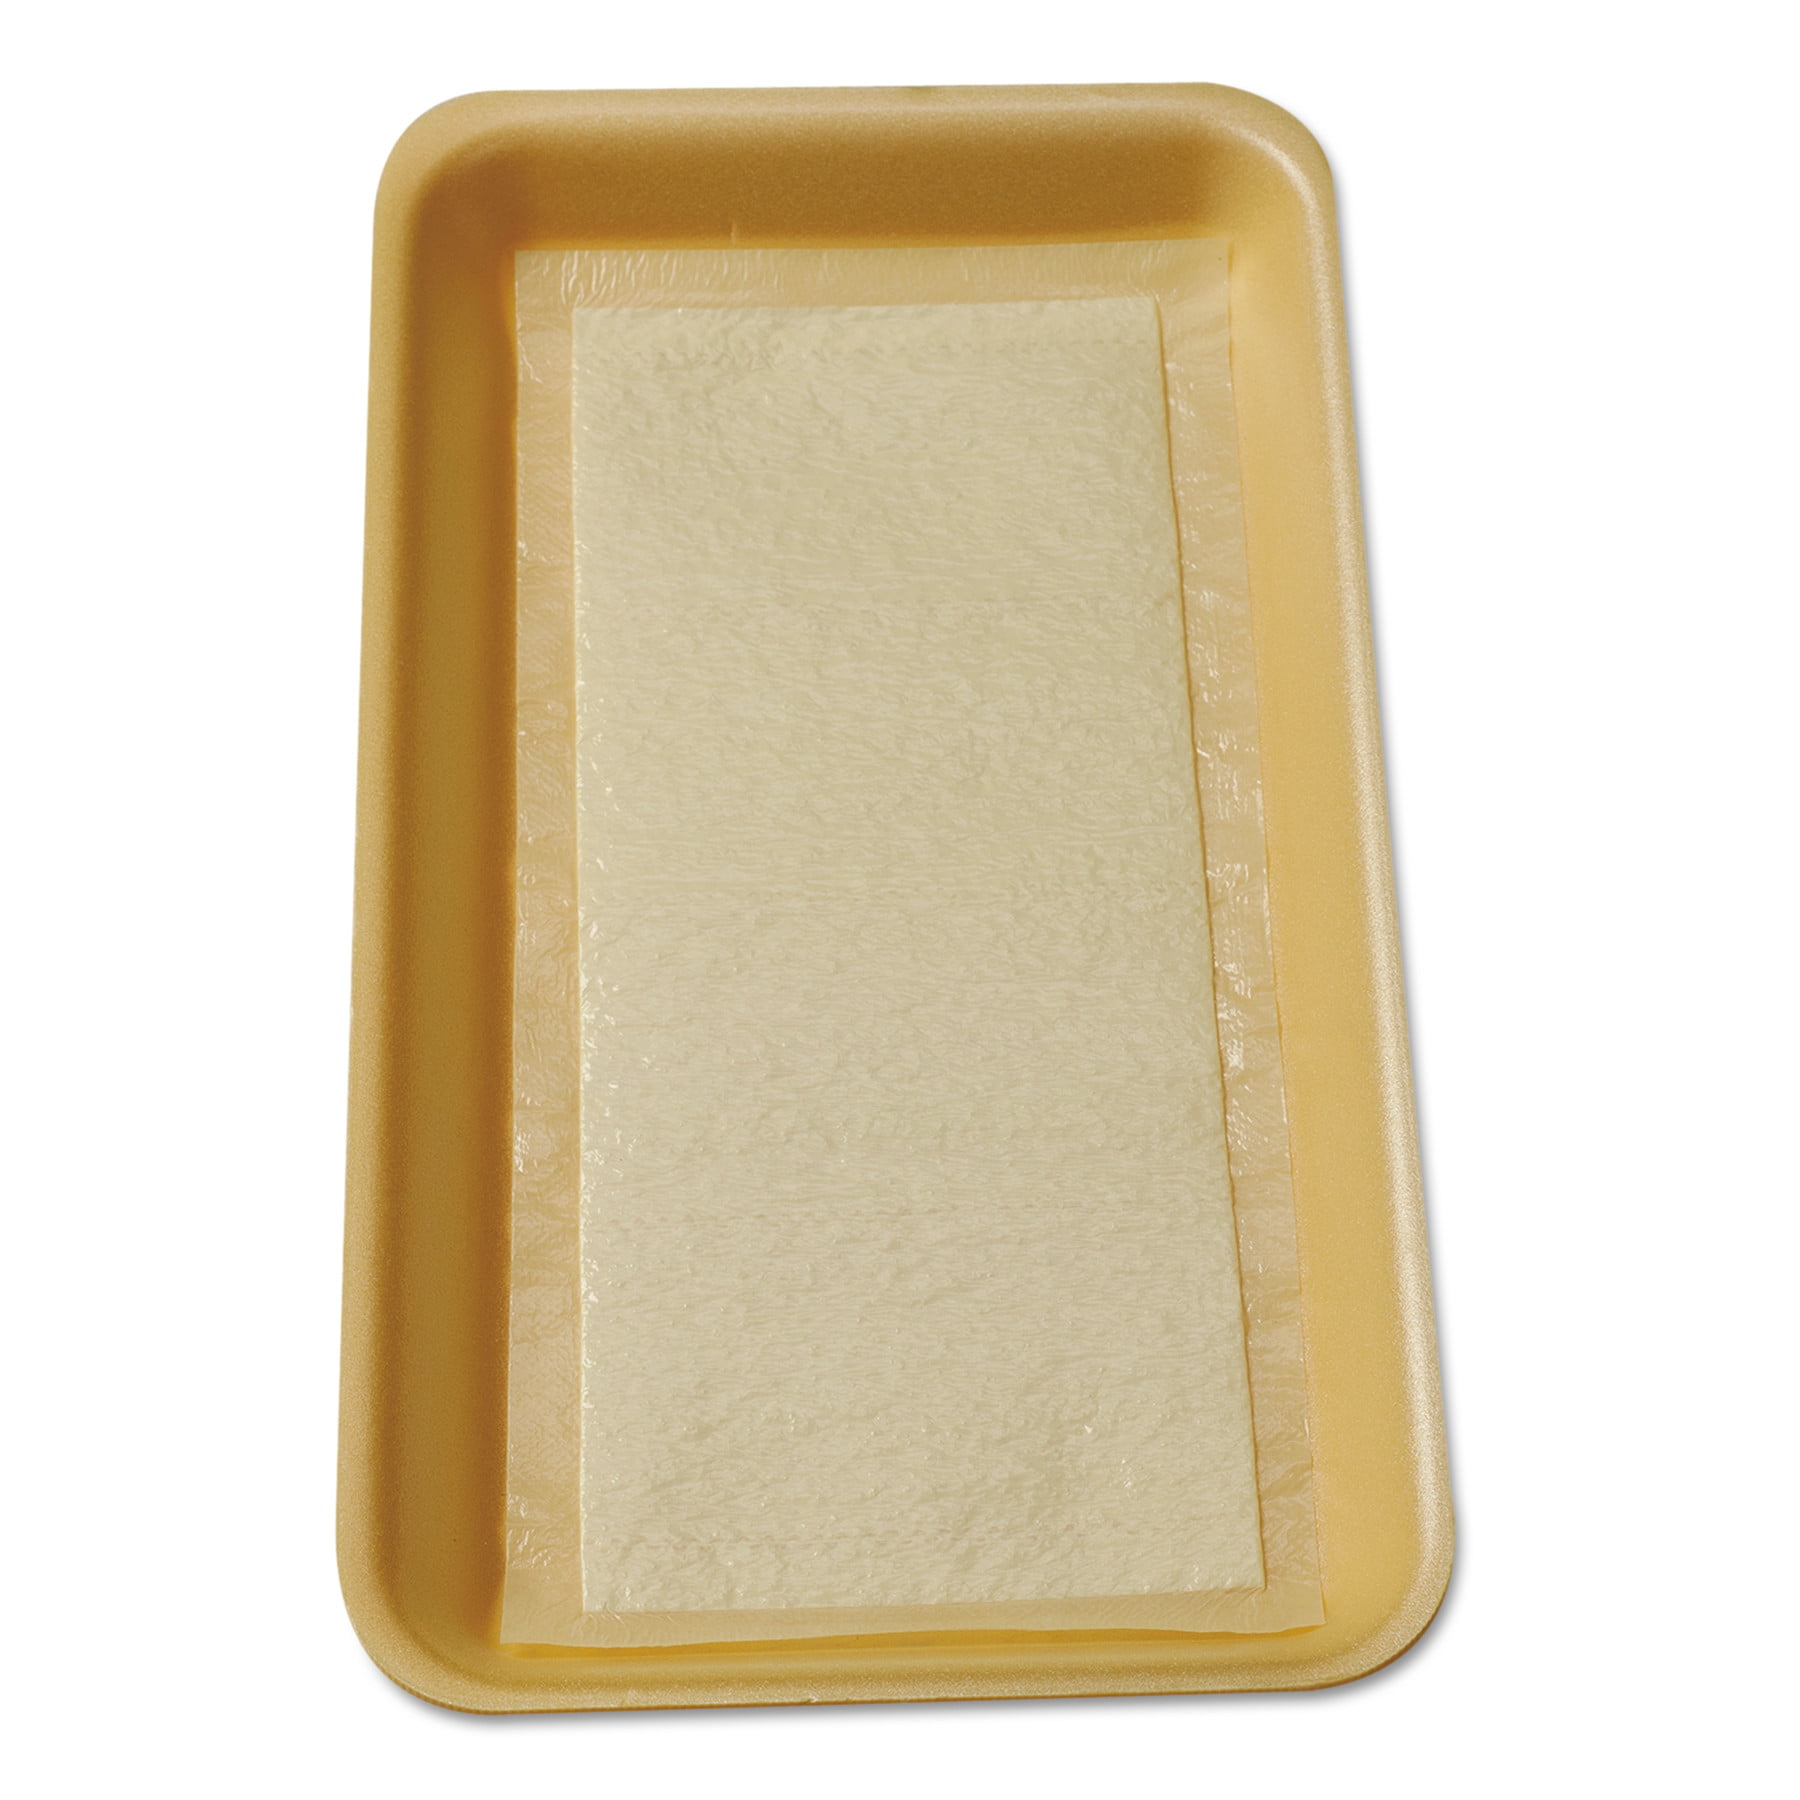 International Tray Pads Meat Tray Pads 6w x 4 1/2d White/Yellow 2000/Carton 